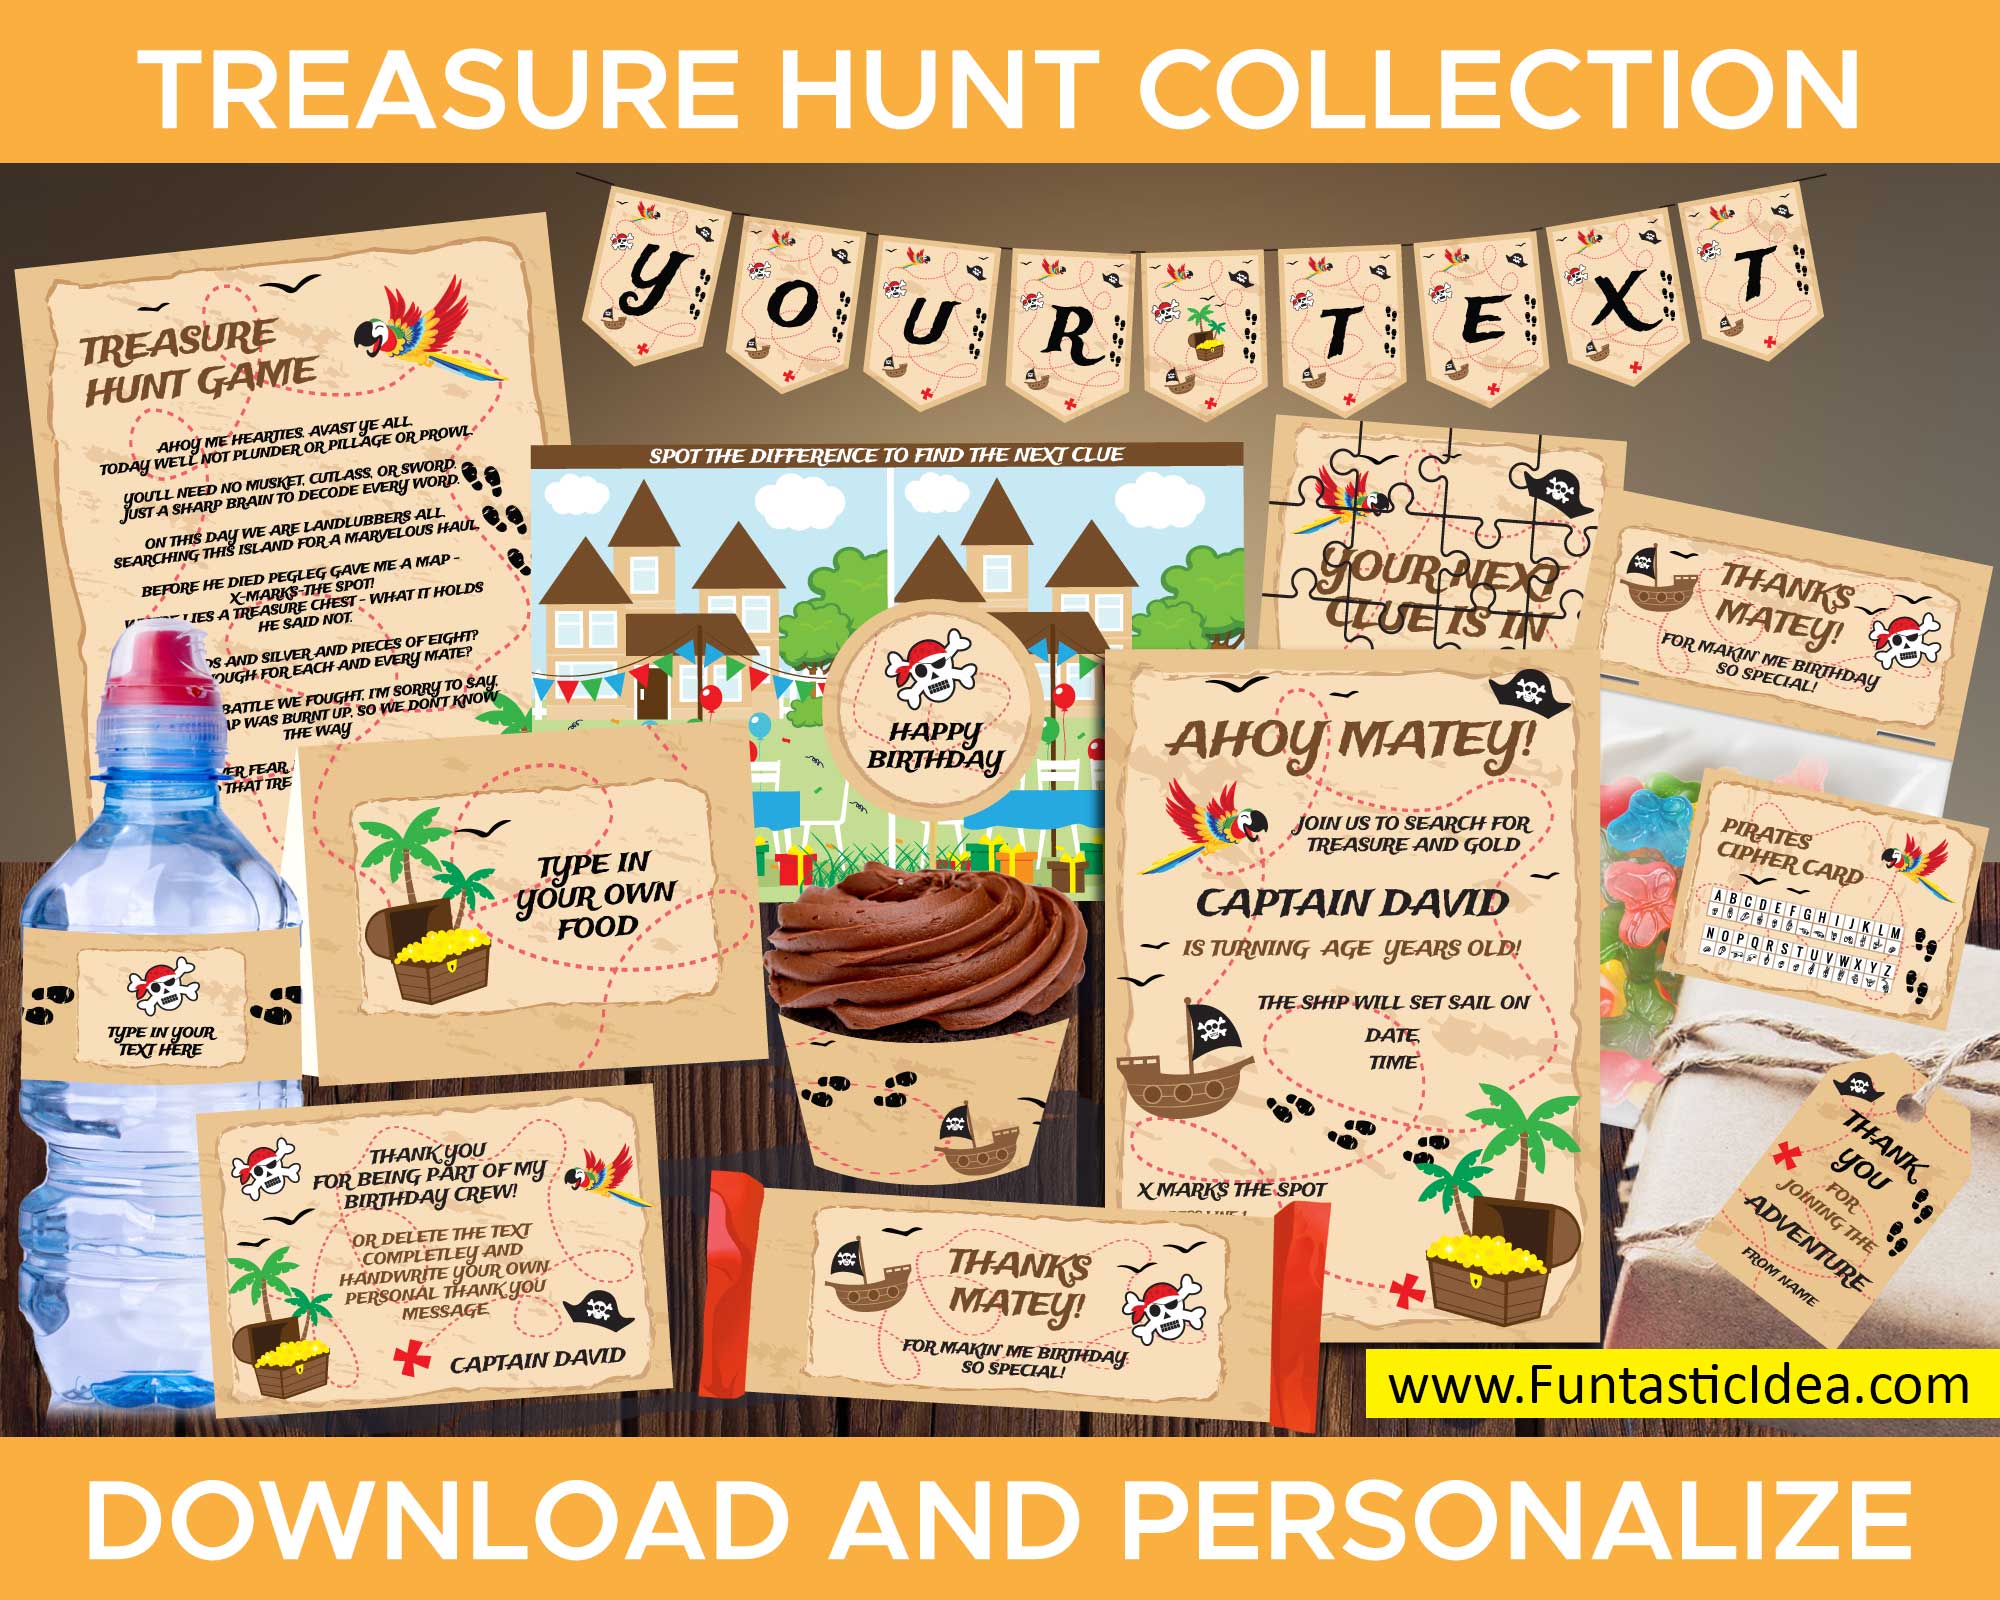 Unicorn birthday party set - Treasure hunt 4 Kids - Printable Party Supplies